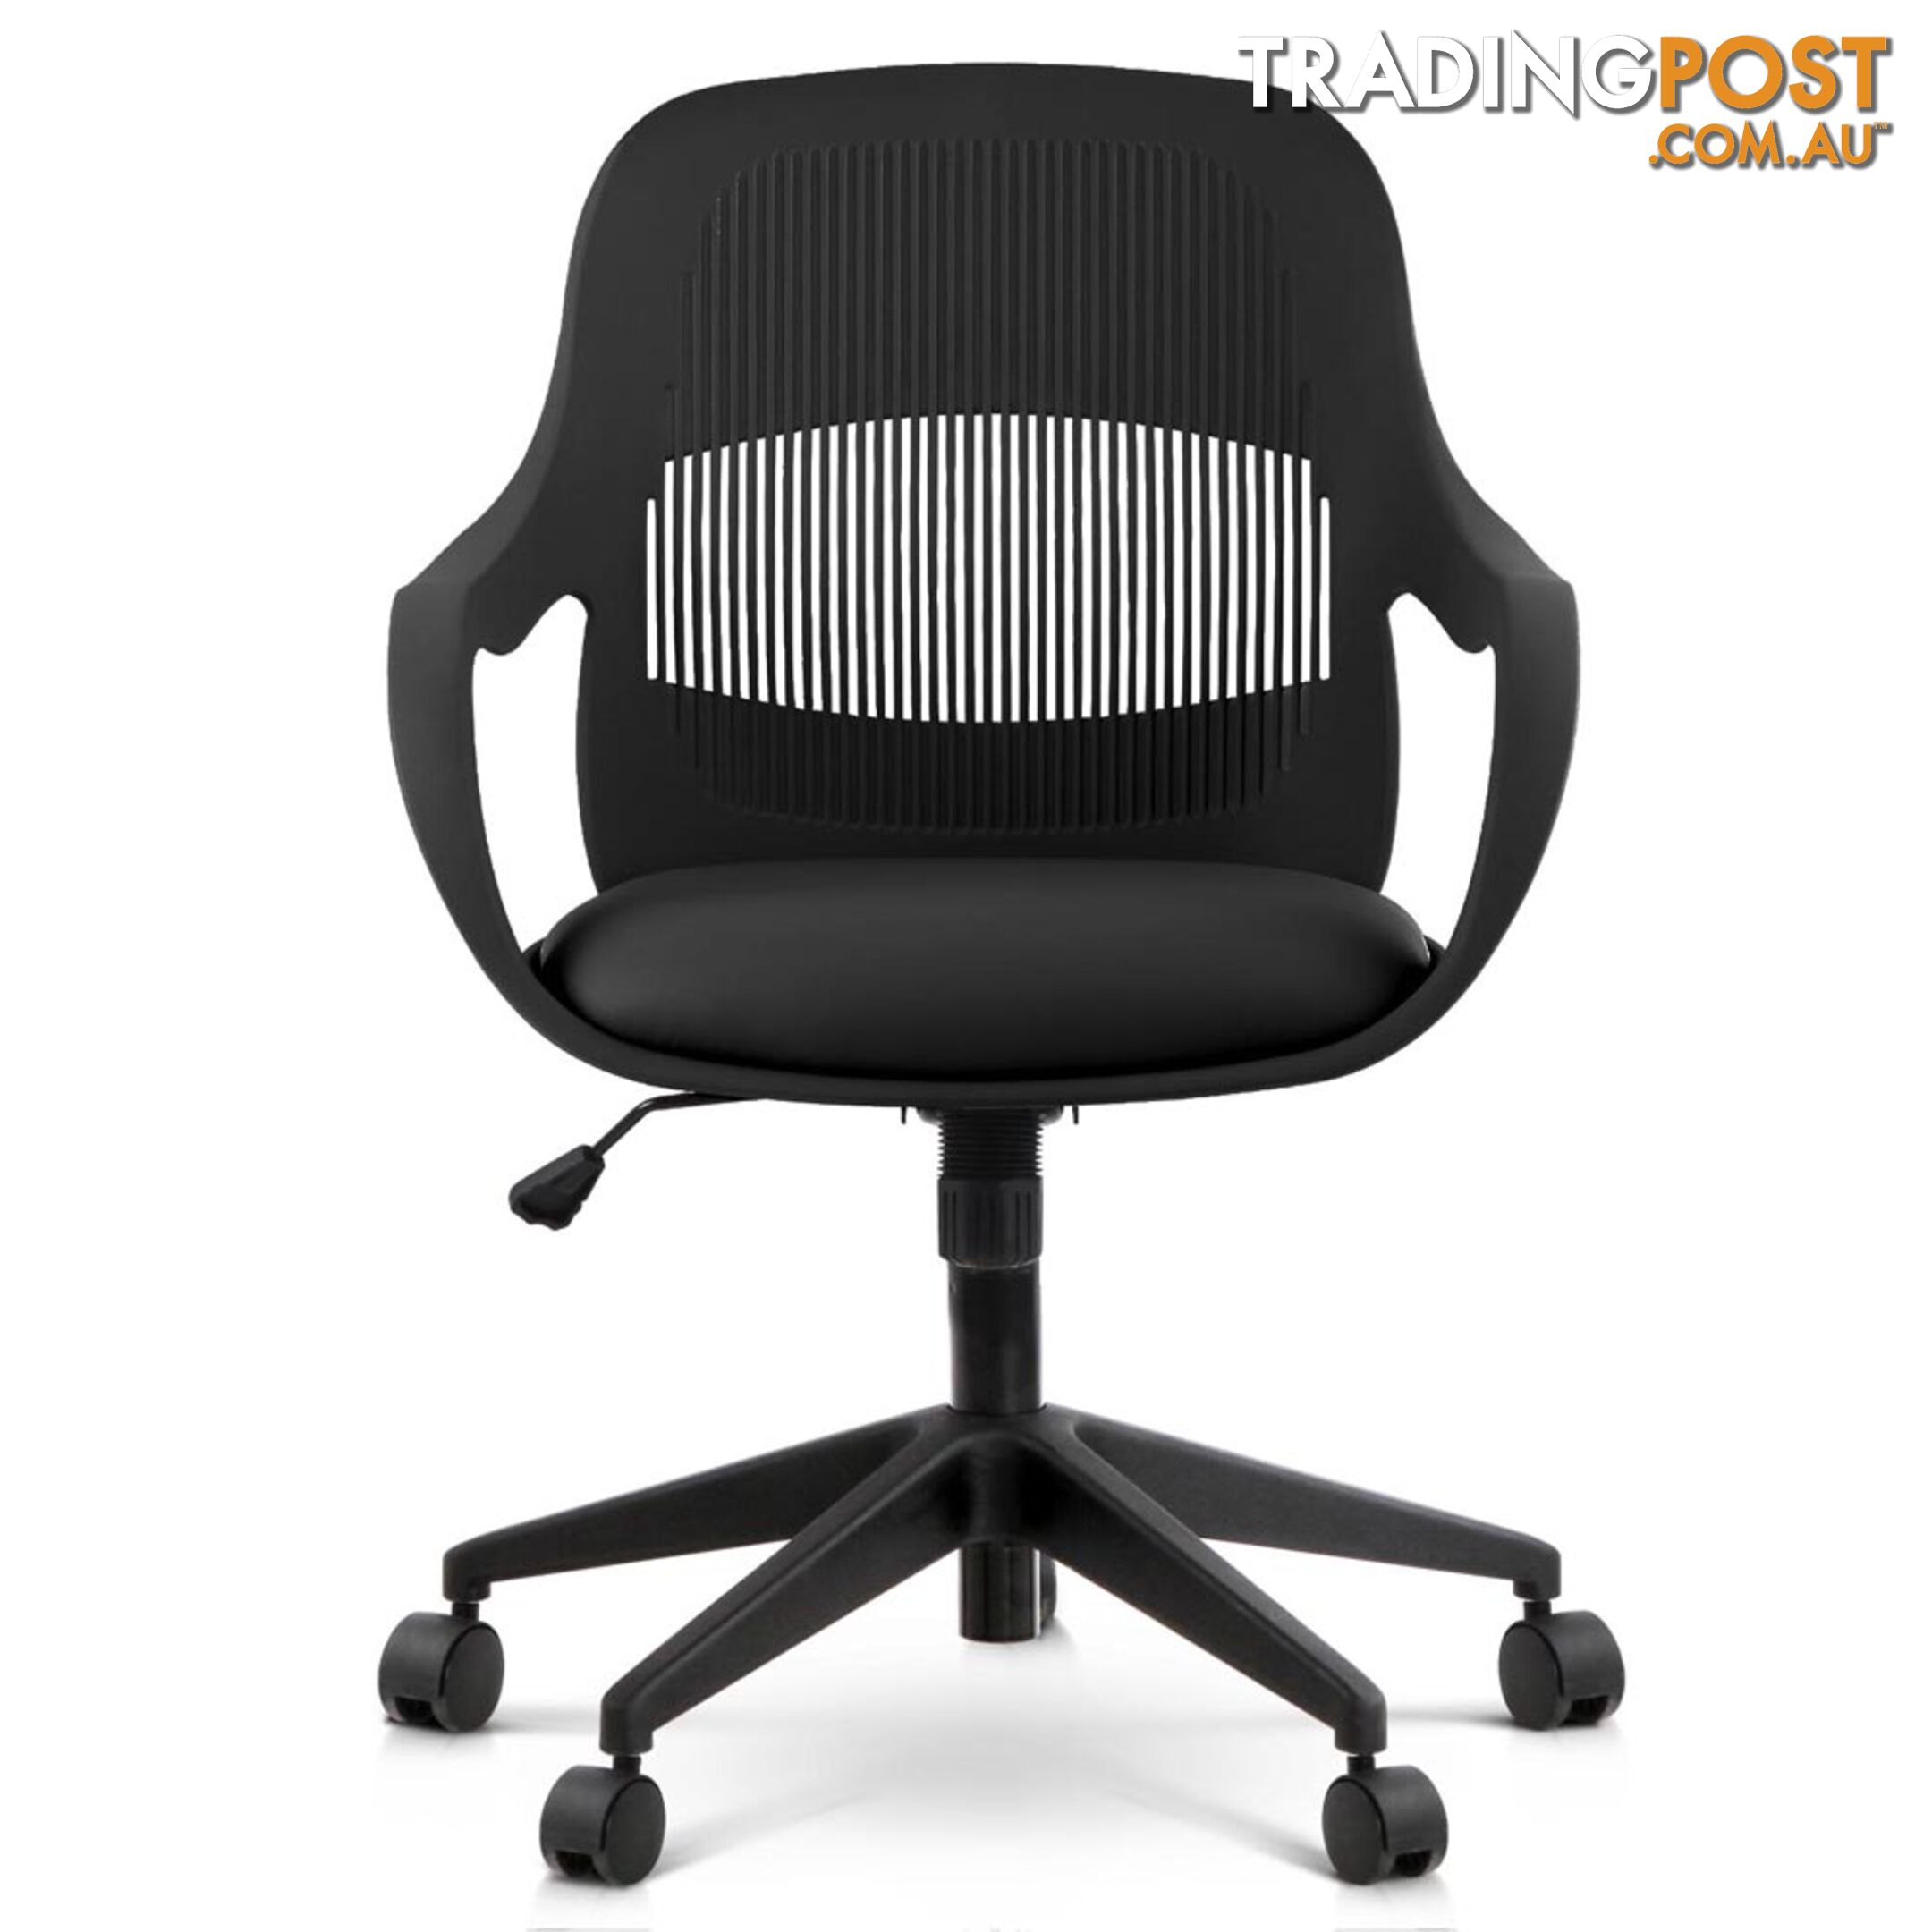 Modern Office Desk Chair  - Black